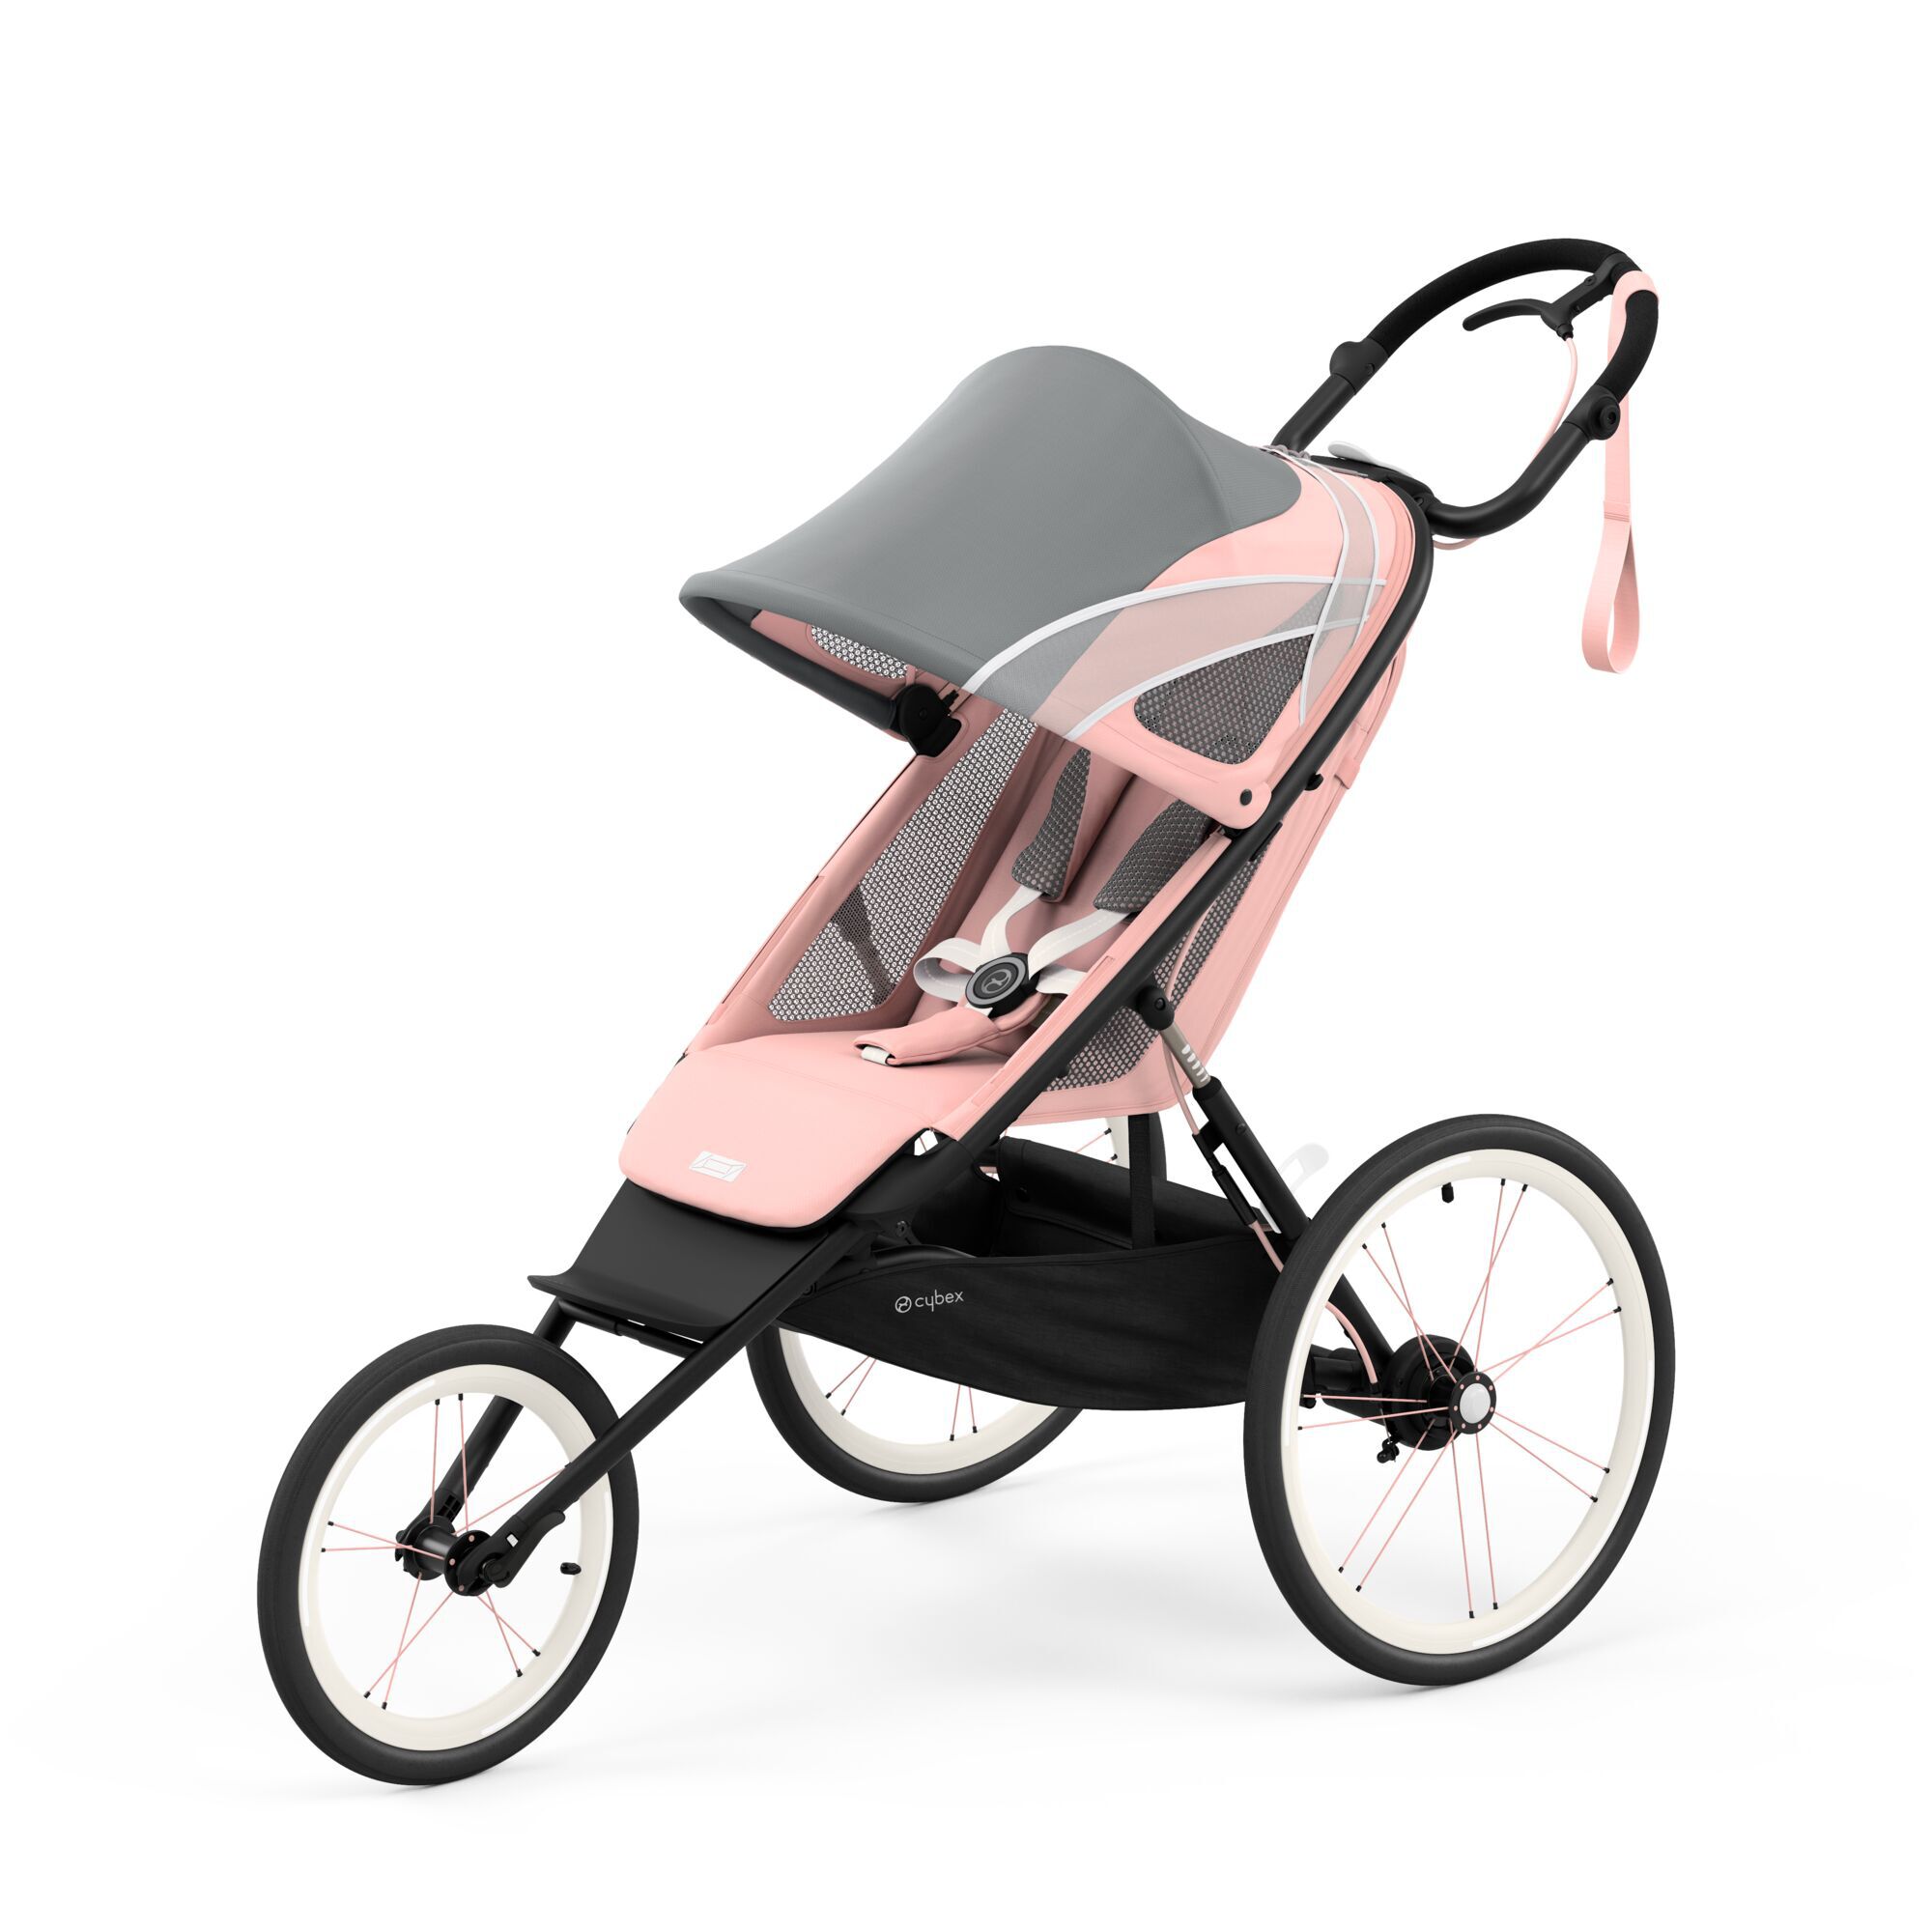 CYBEX AVI Jogging Stroller Seat Pack Compact Fold for Storage One-Handed Steering,Rear-Wheel Suspension & Handbrake Height-Adjustable Handlebar For Infants 9 months+,All Black Frame not Included 